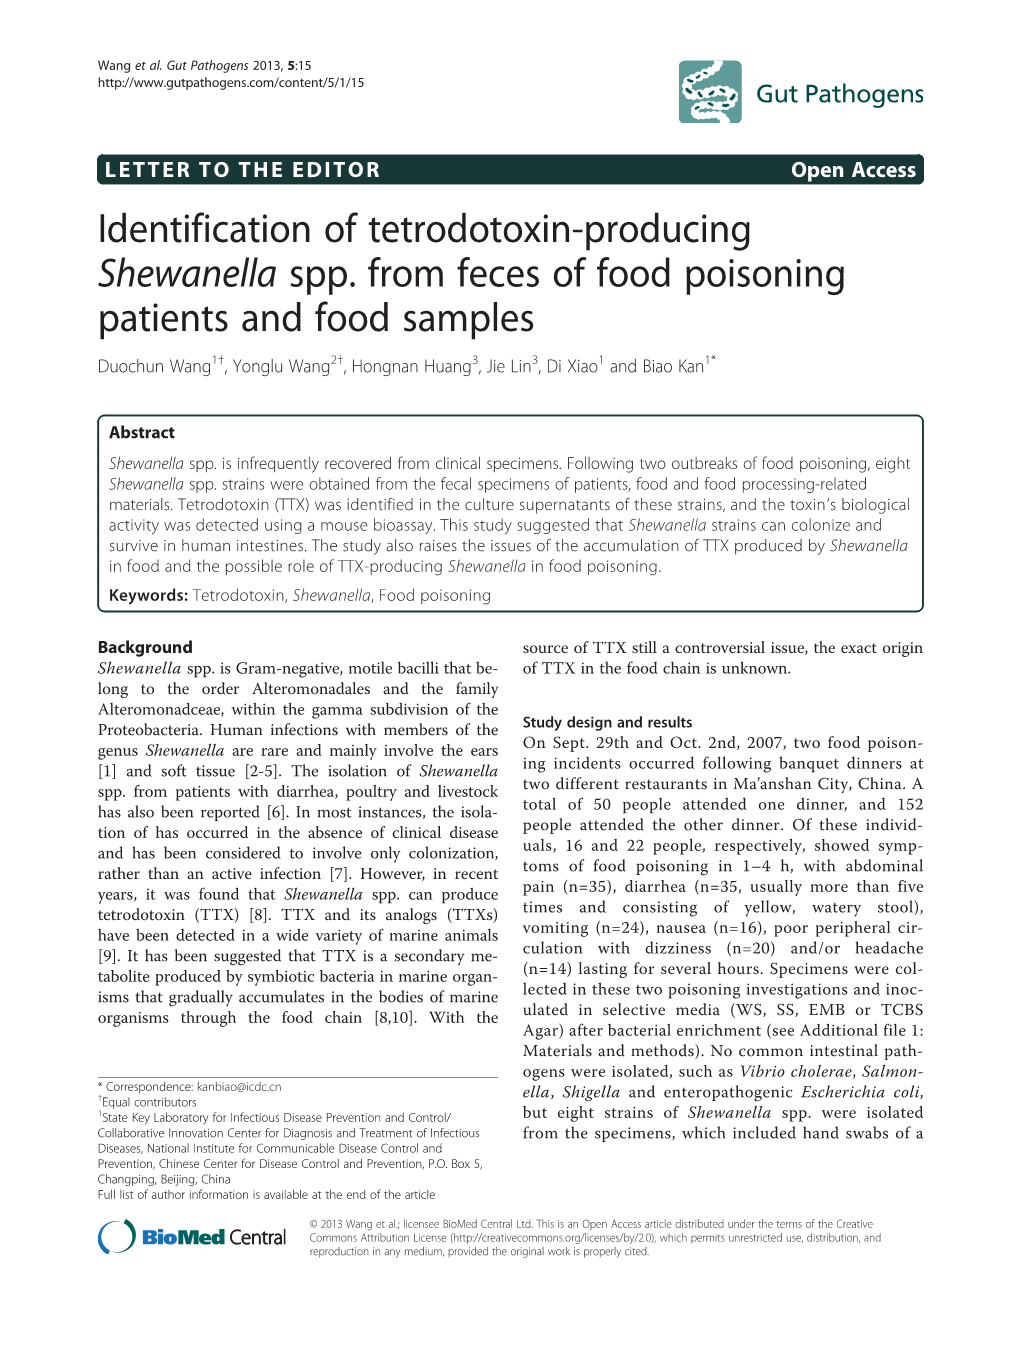 Identification of Tetrodotoxin-Producing Shewanella Spp